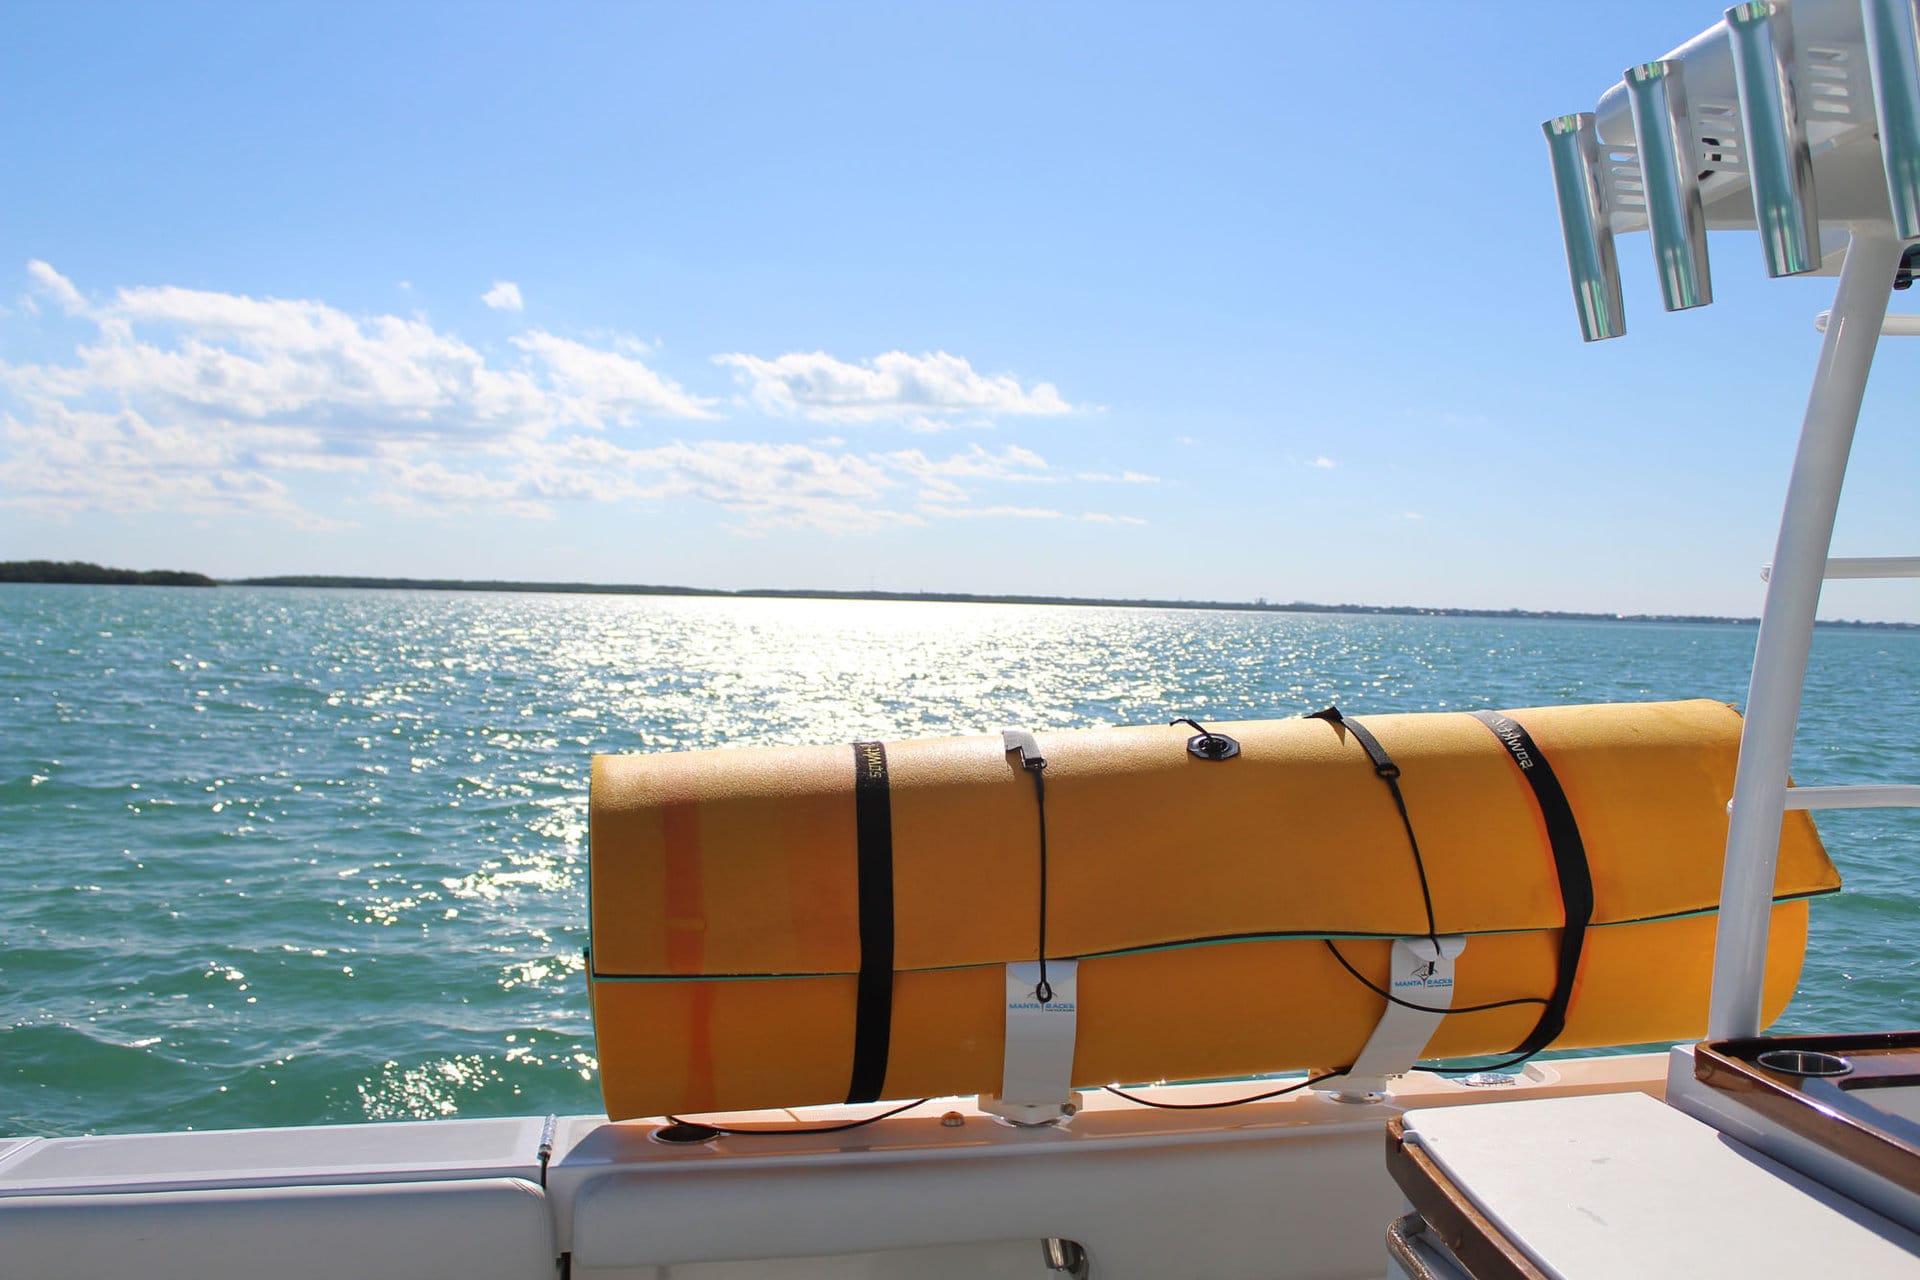 Pontoon Boat Fishing Rod Storage Ideas & Racks: Keep Your Poles Safe